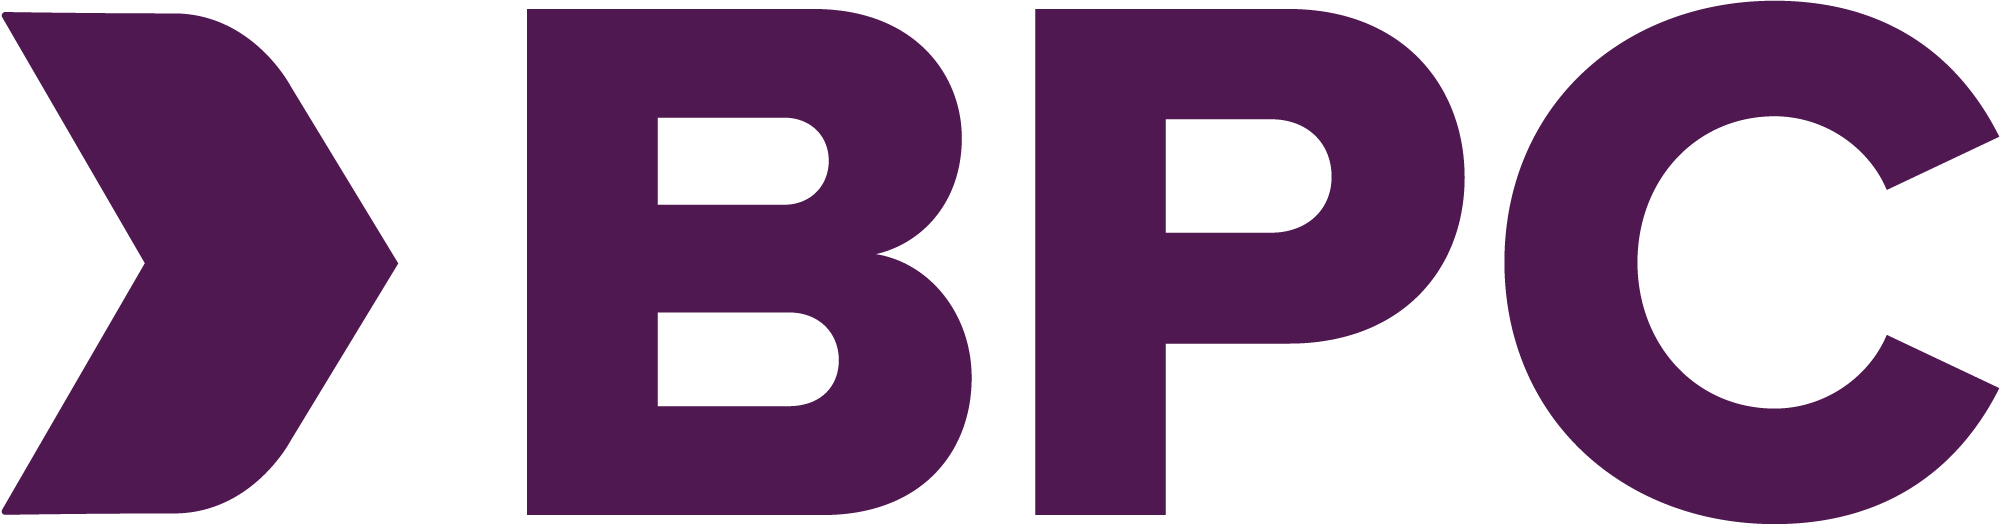 bpc-logo-2000x525